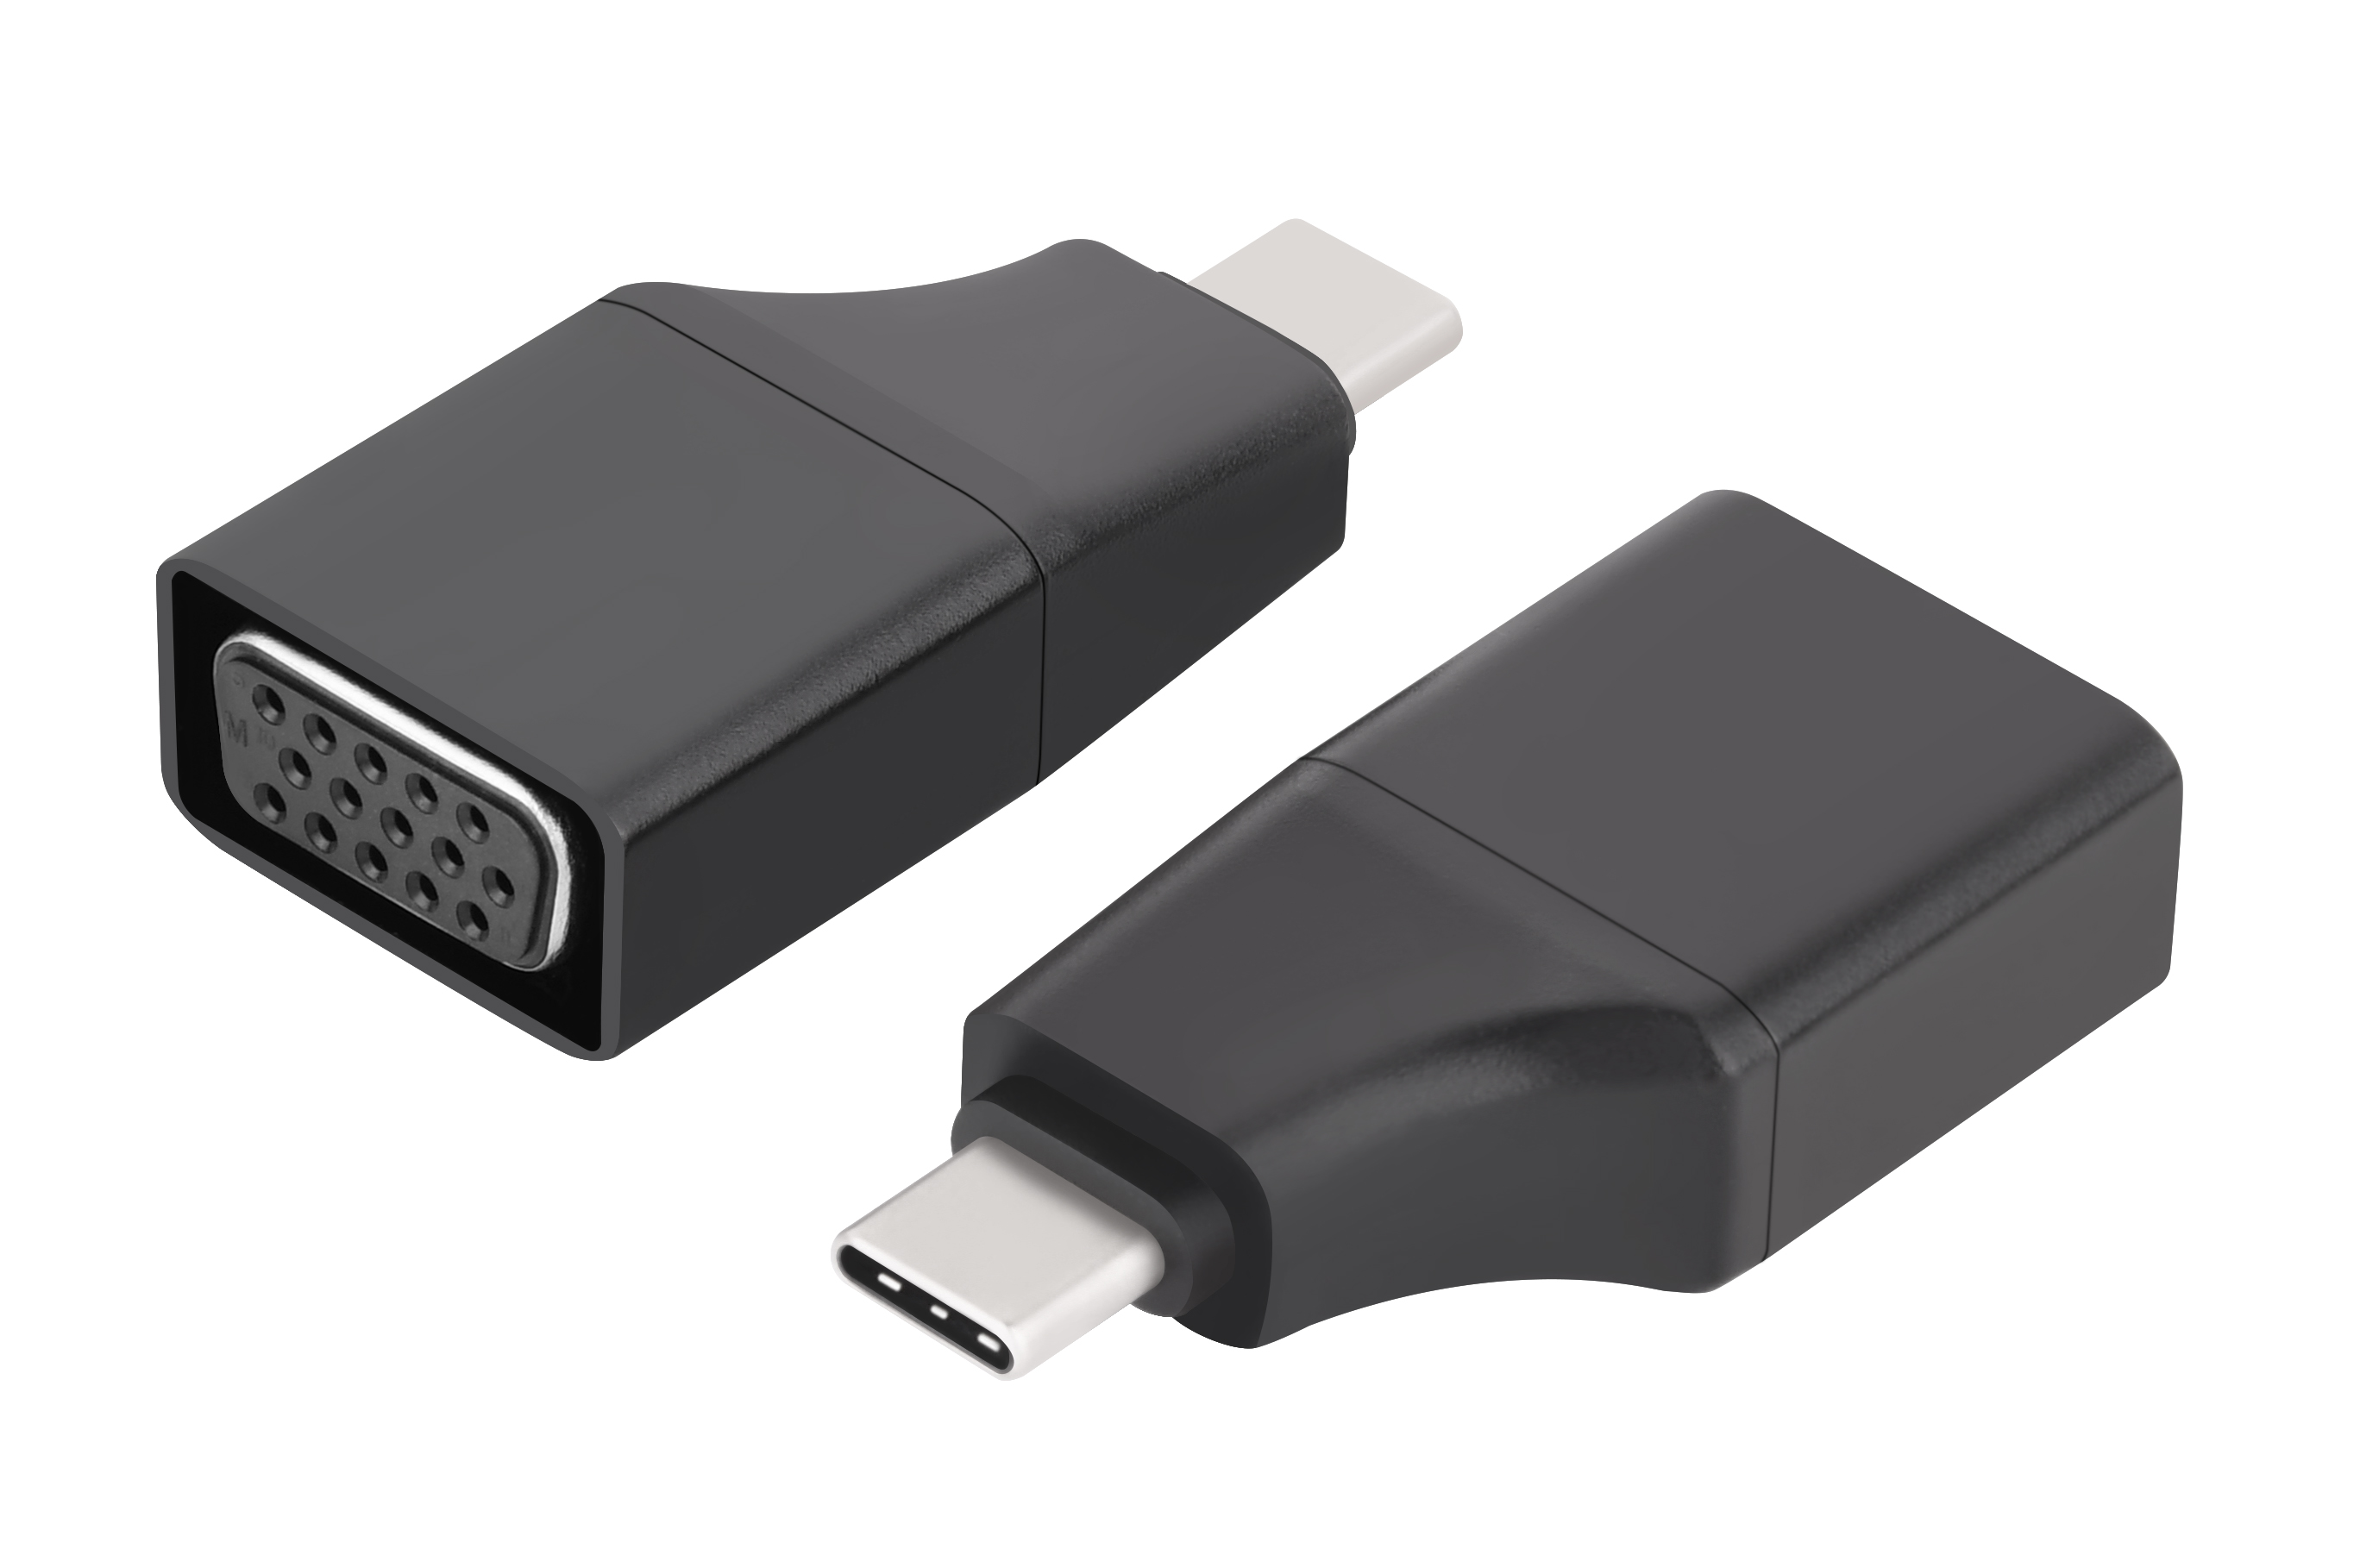 USB C to VGA Adapter